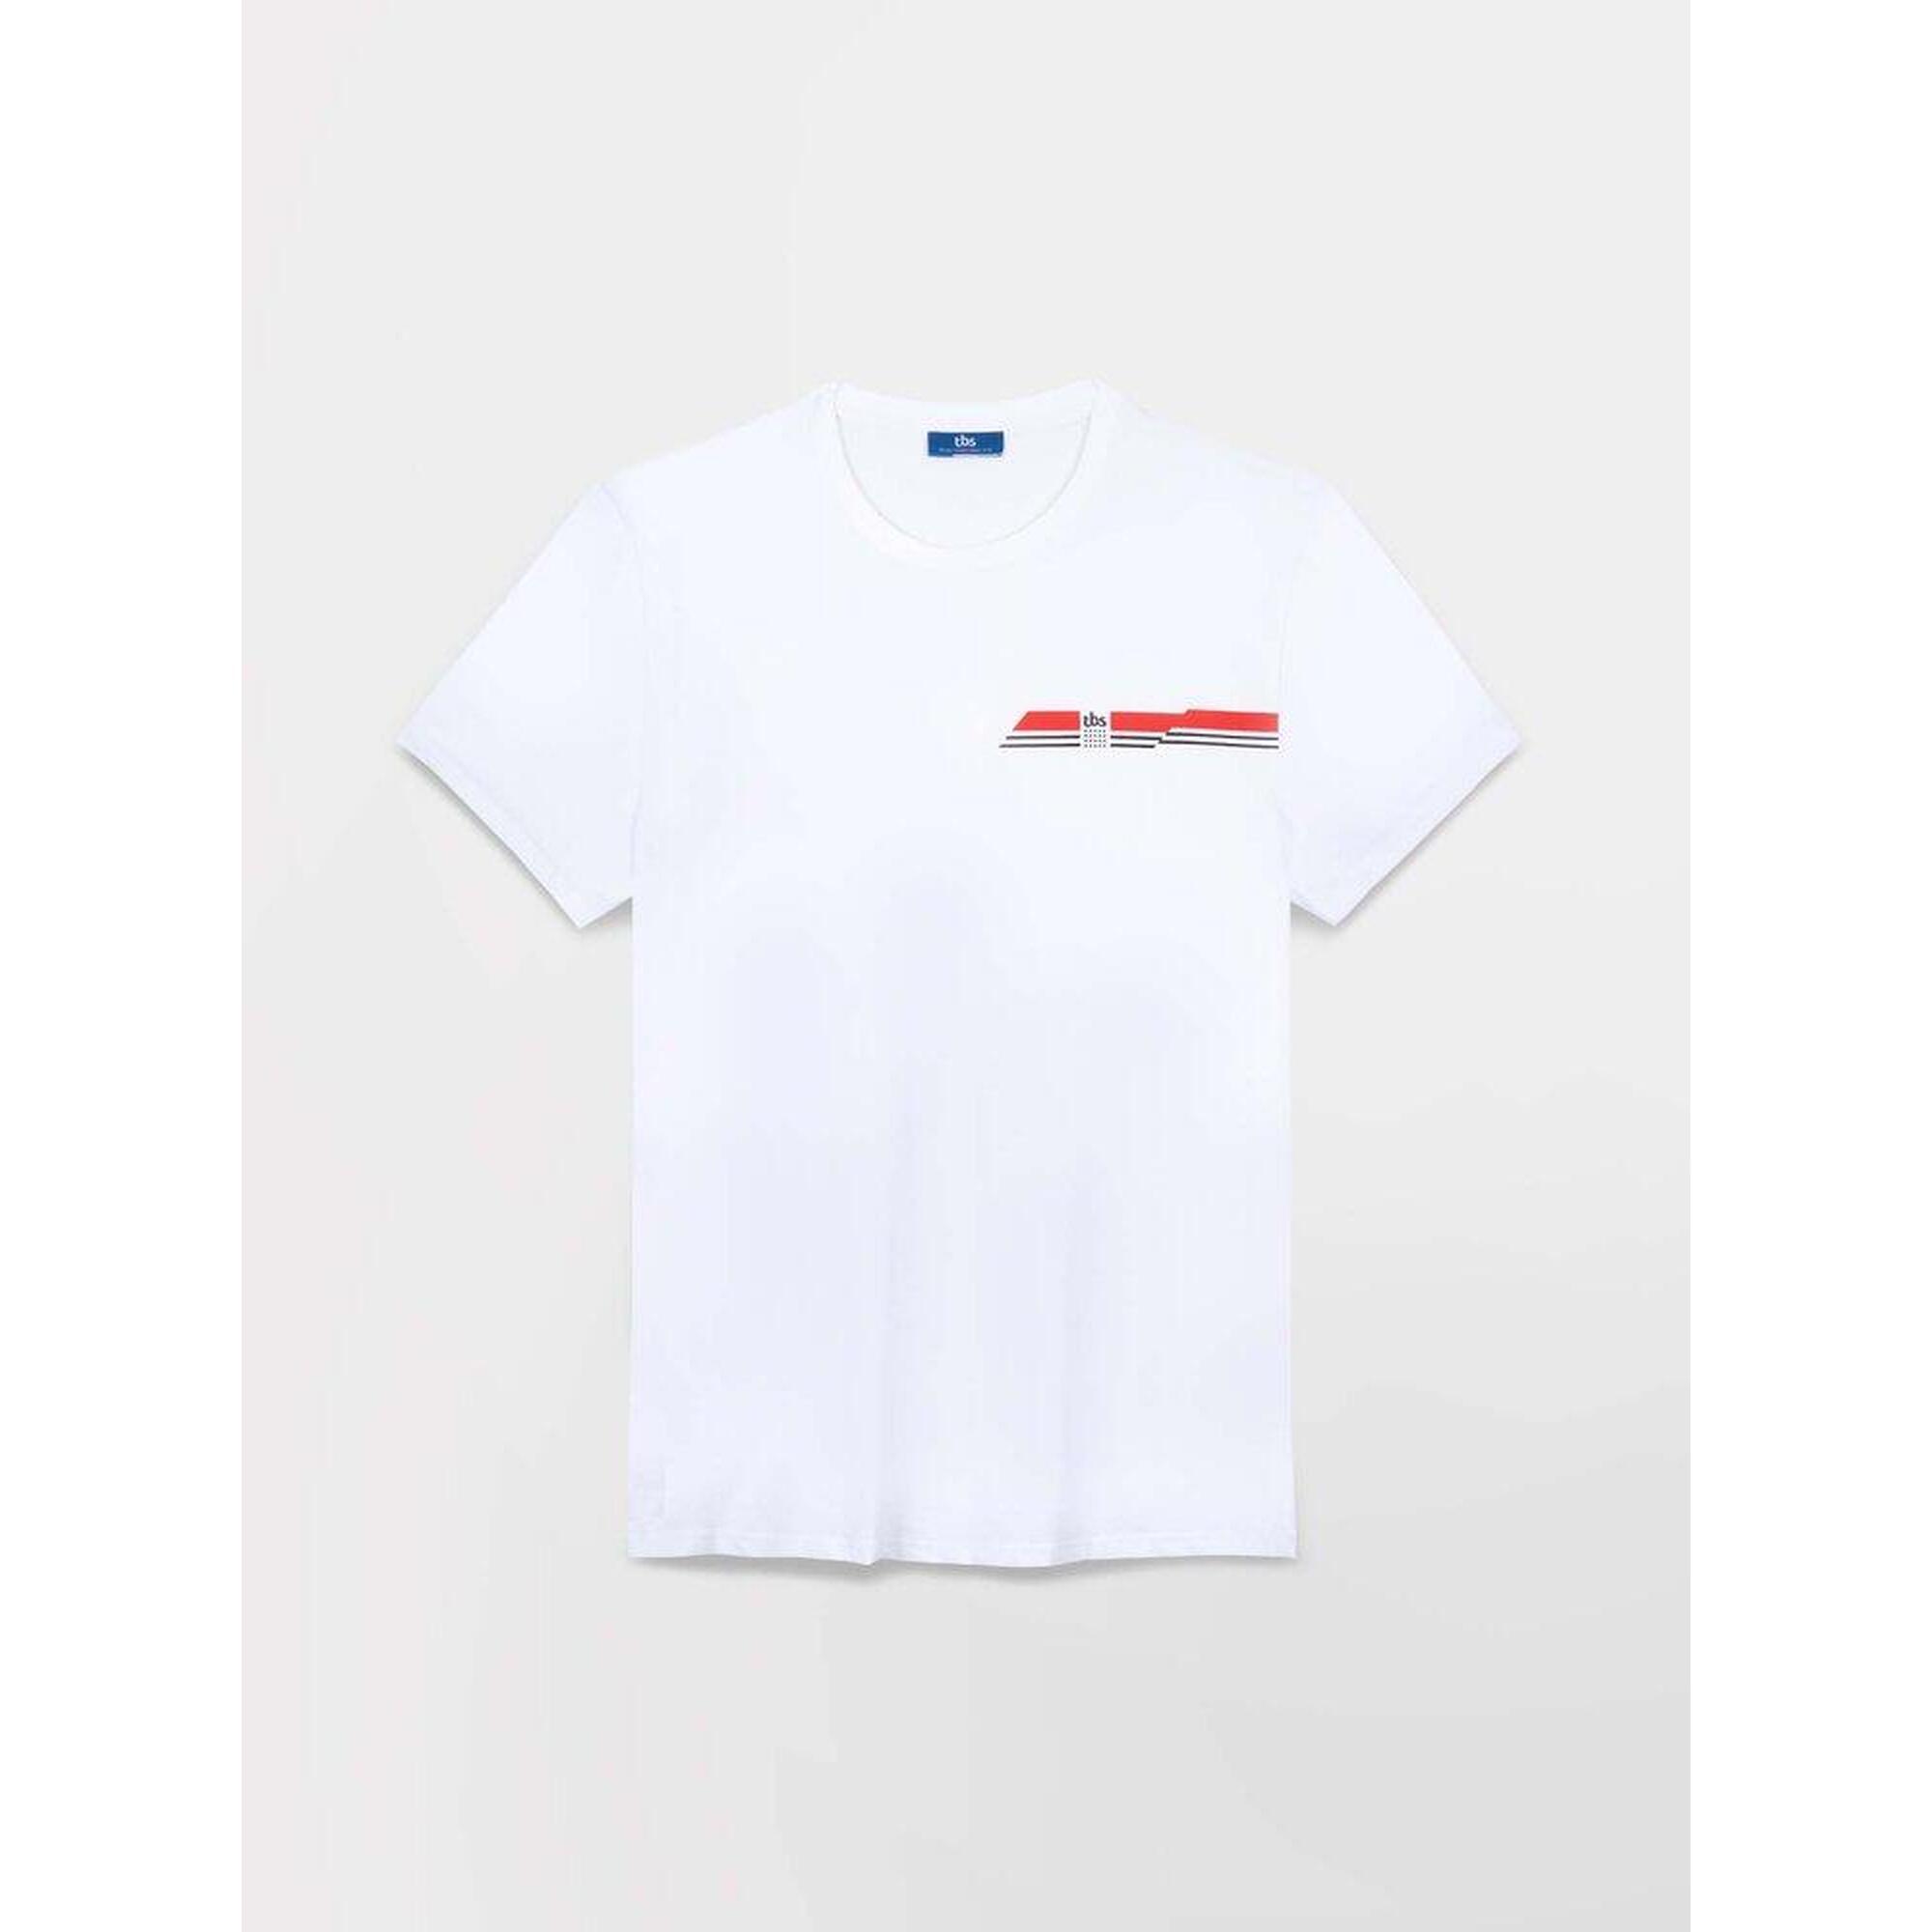 T-shirt manches courtes Homme - LABELTEE Blanc